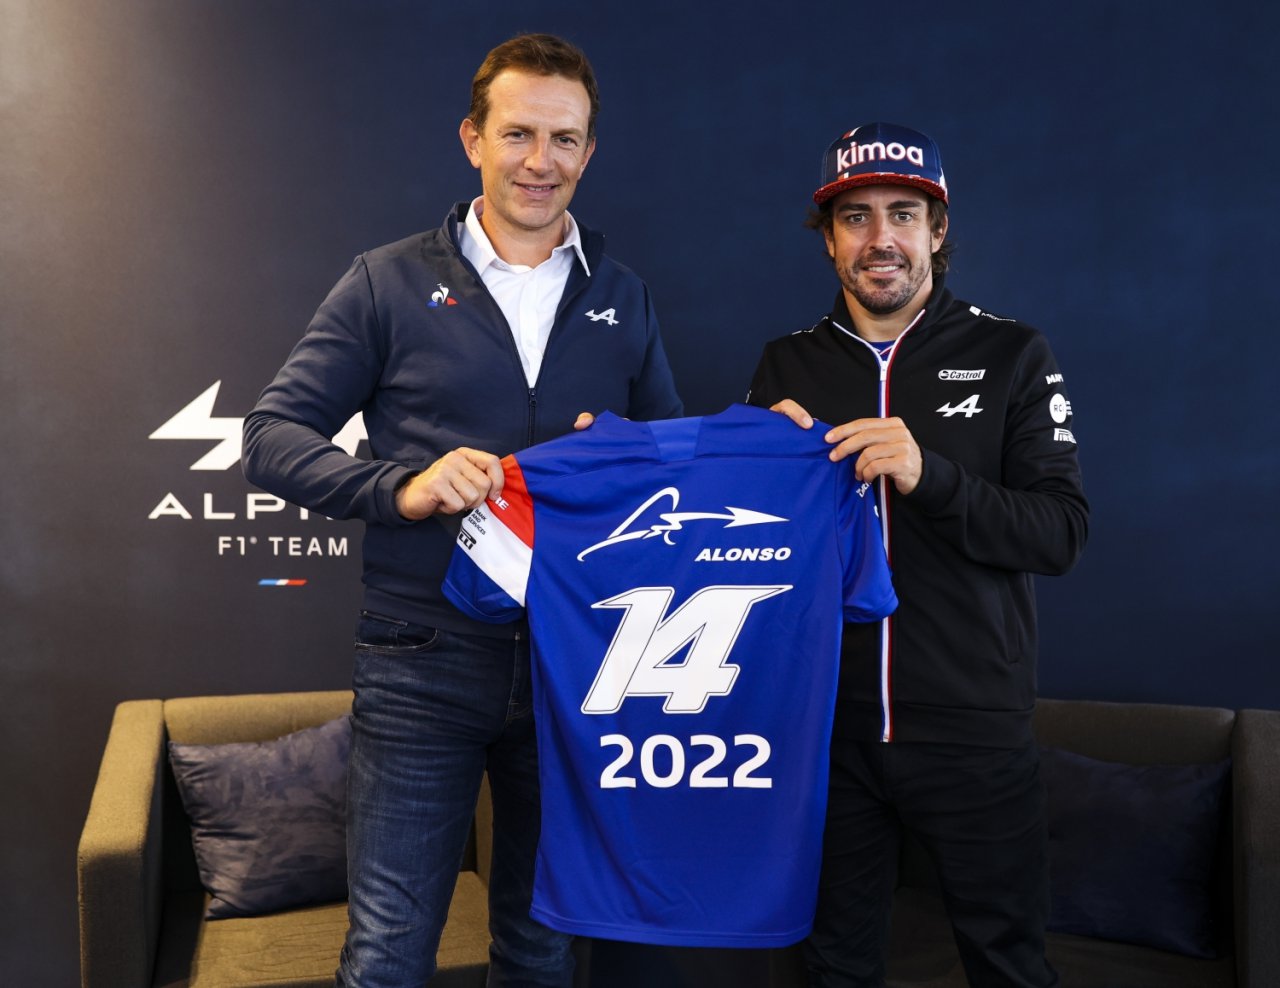 Fernando Alonco driver for the BWT Alpine F1 team 